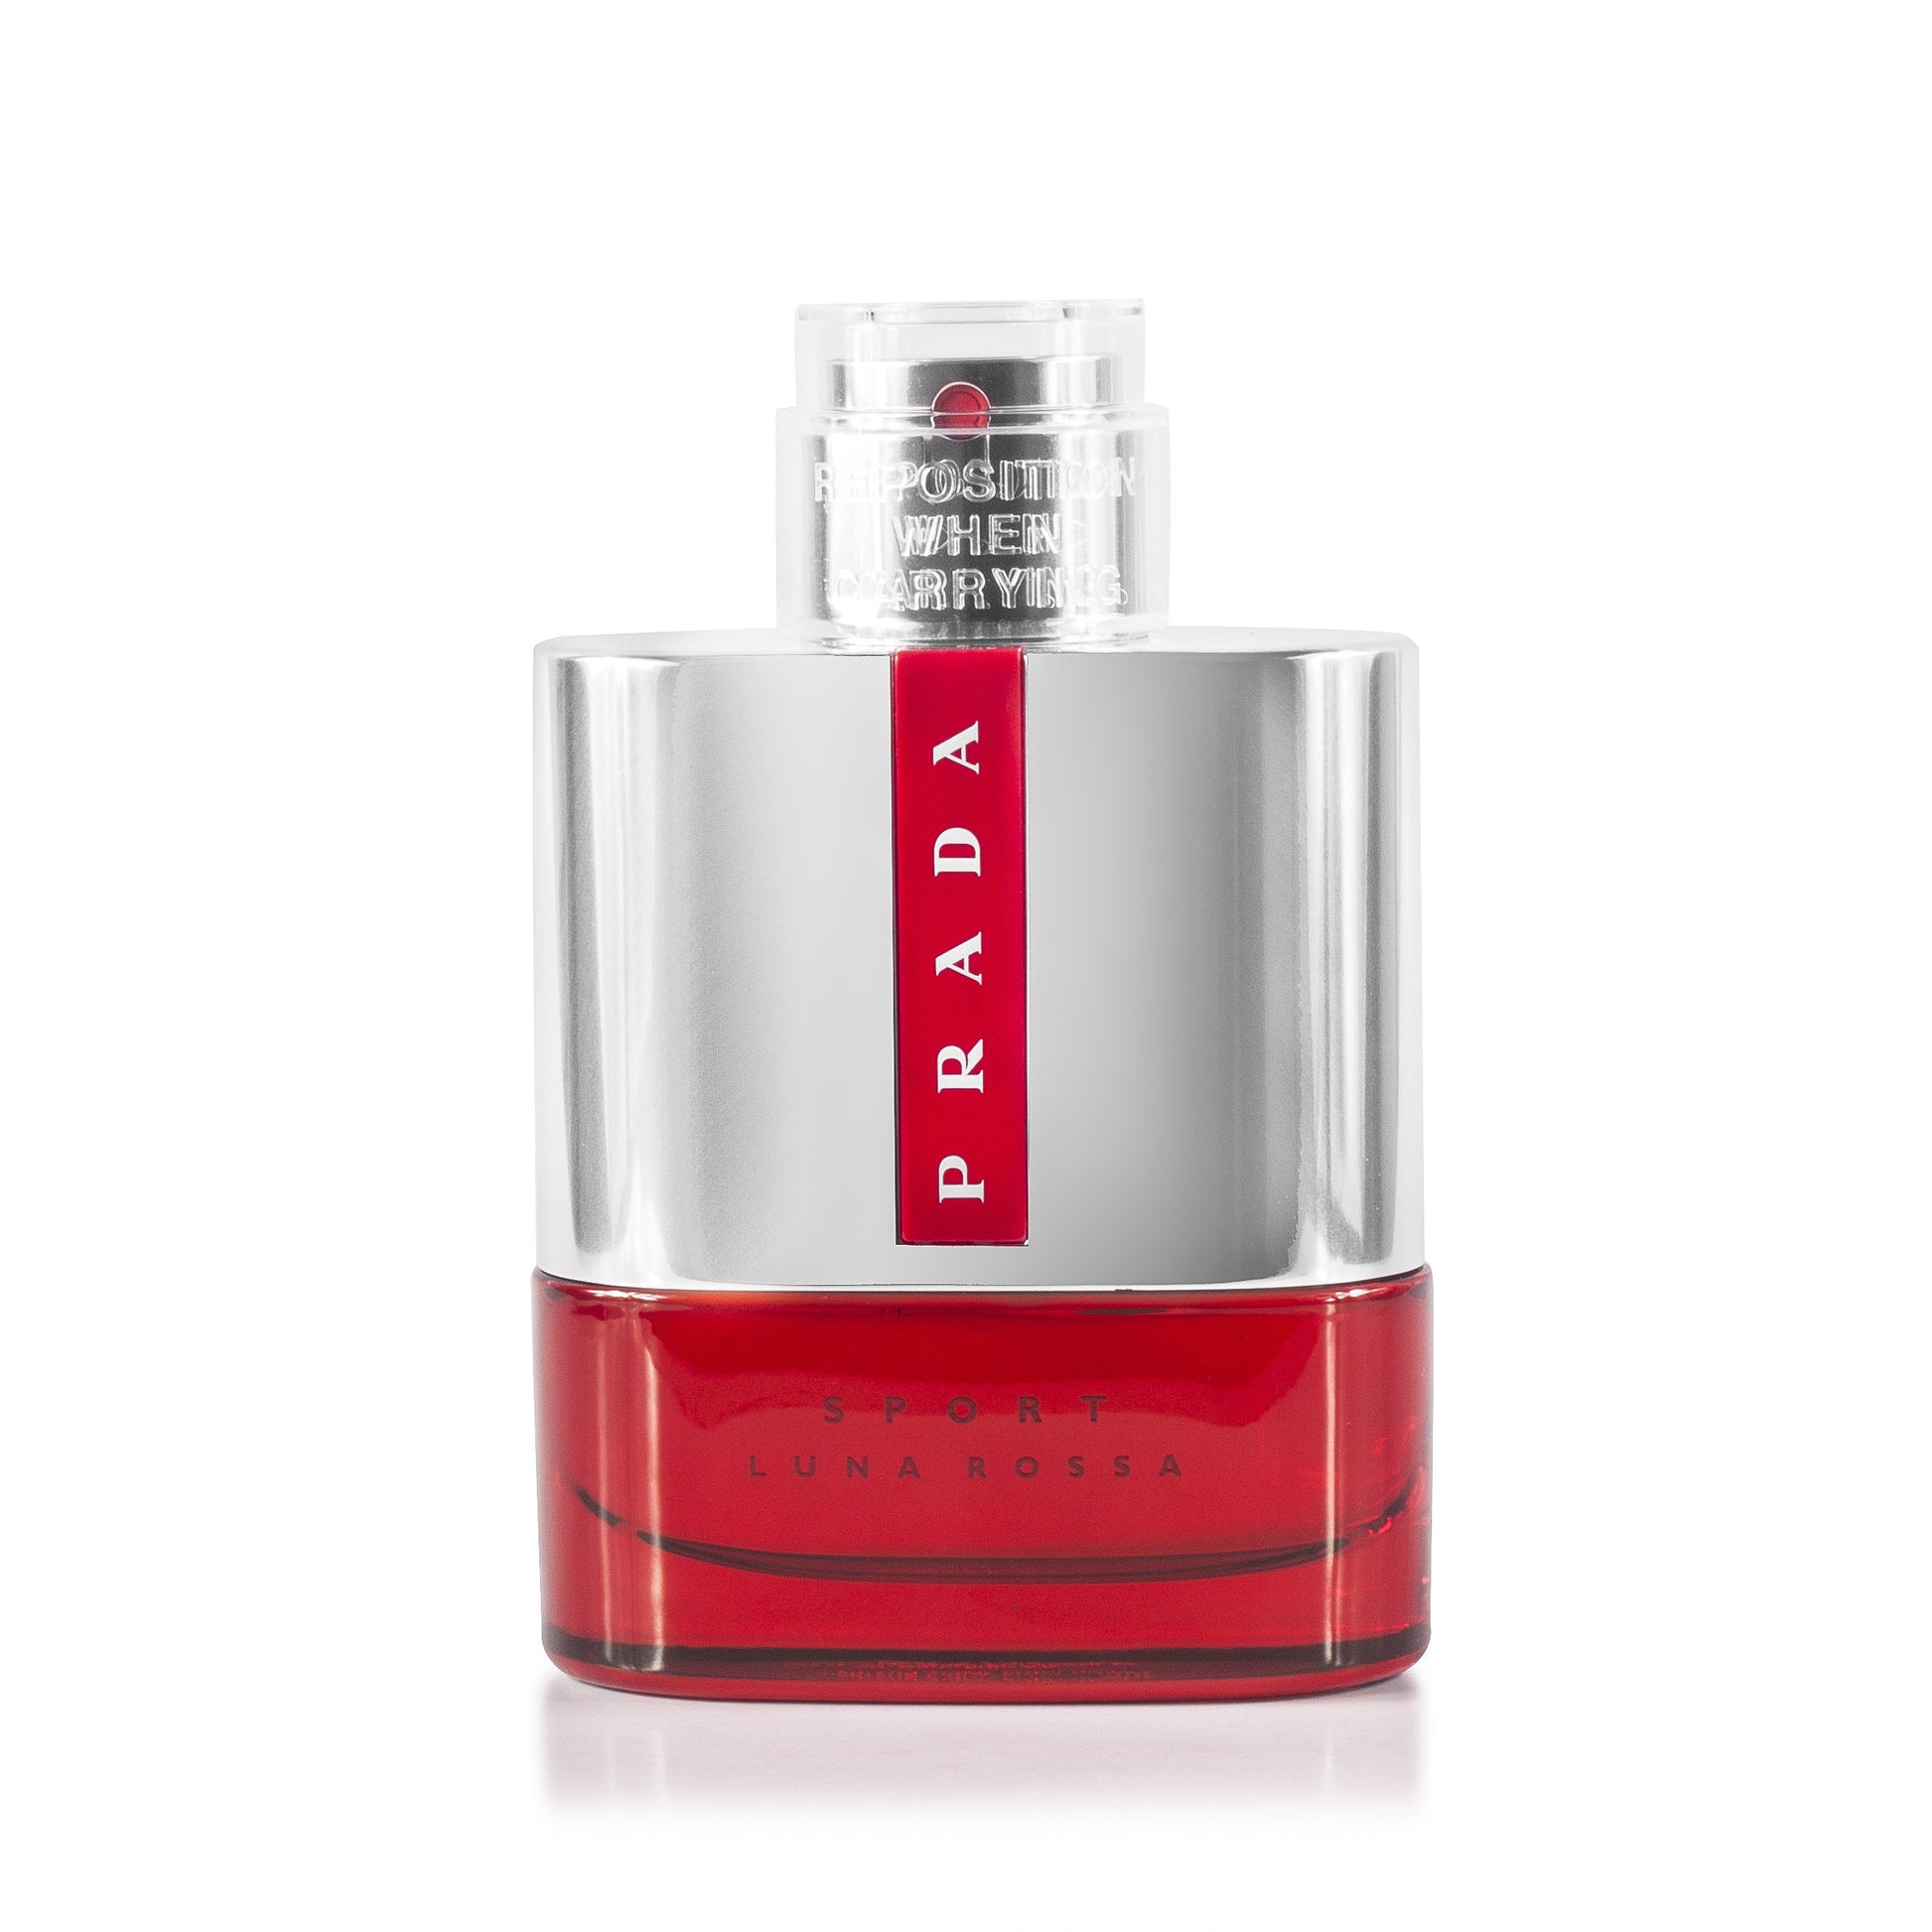 Luna Rossa Sport Eau de Toilette Spray for Men by Prada, Product image 4